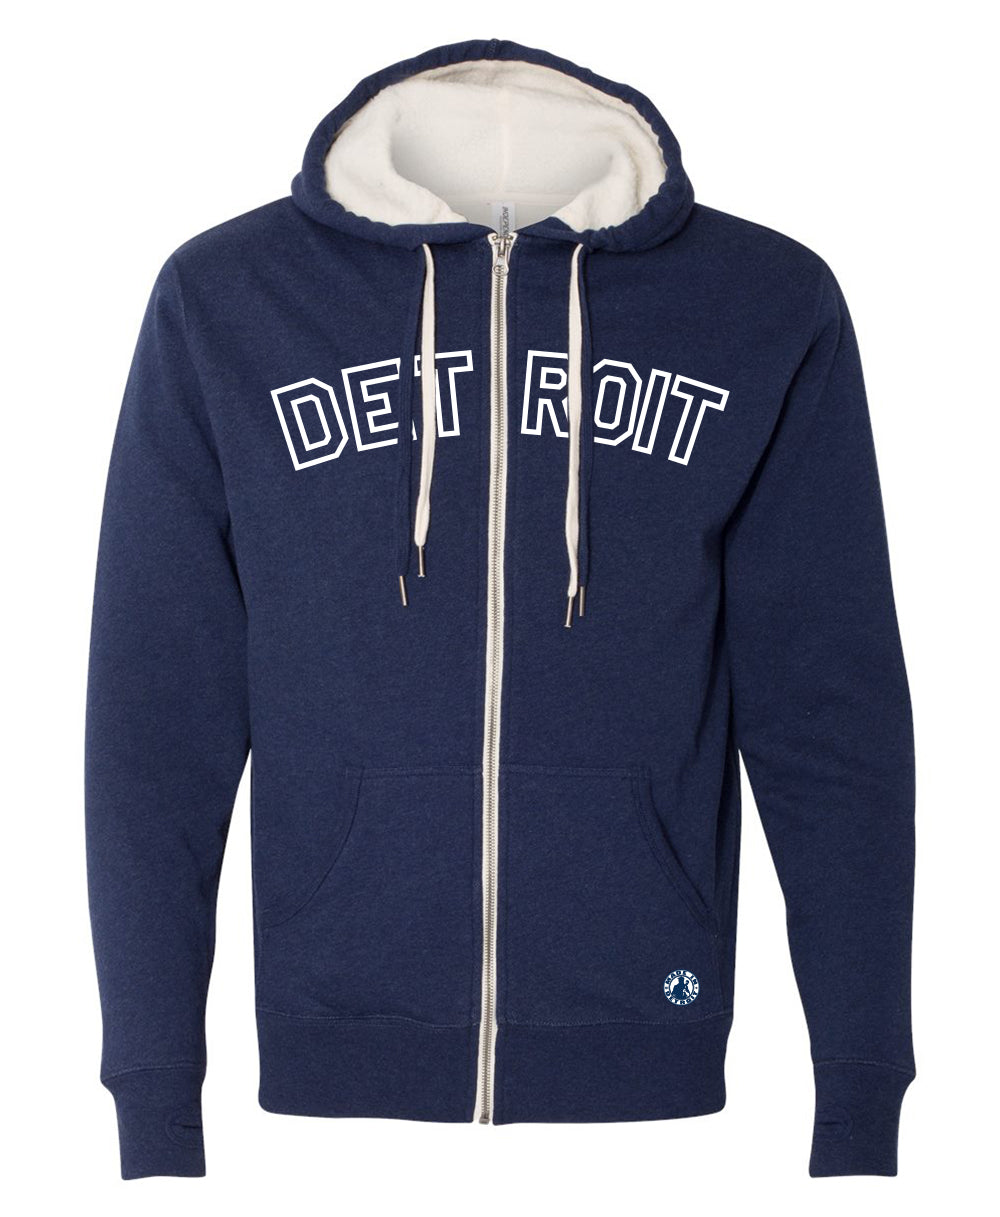 Navy Detroit Sherpa Lined zip up pullover sweatshirt hoodie